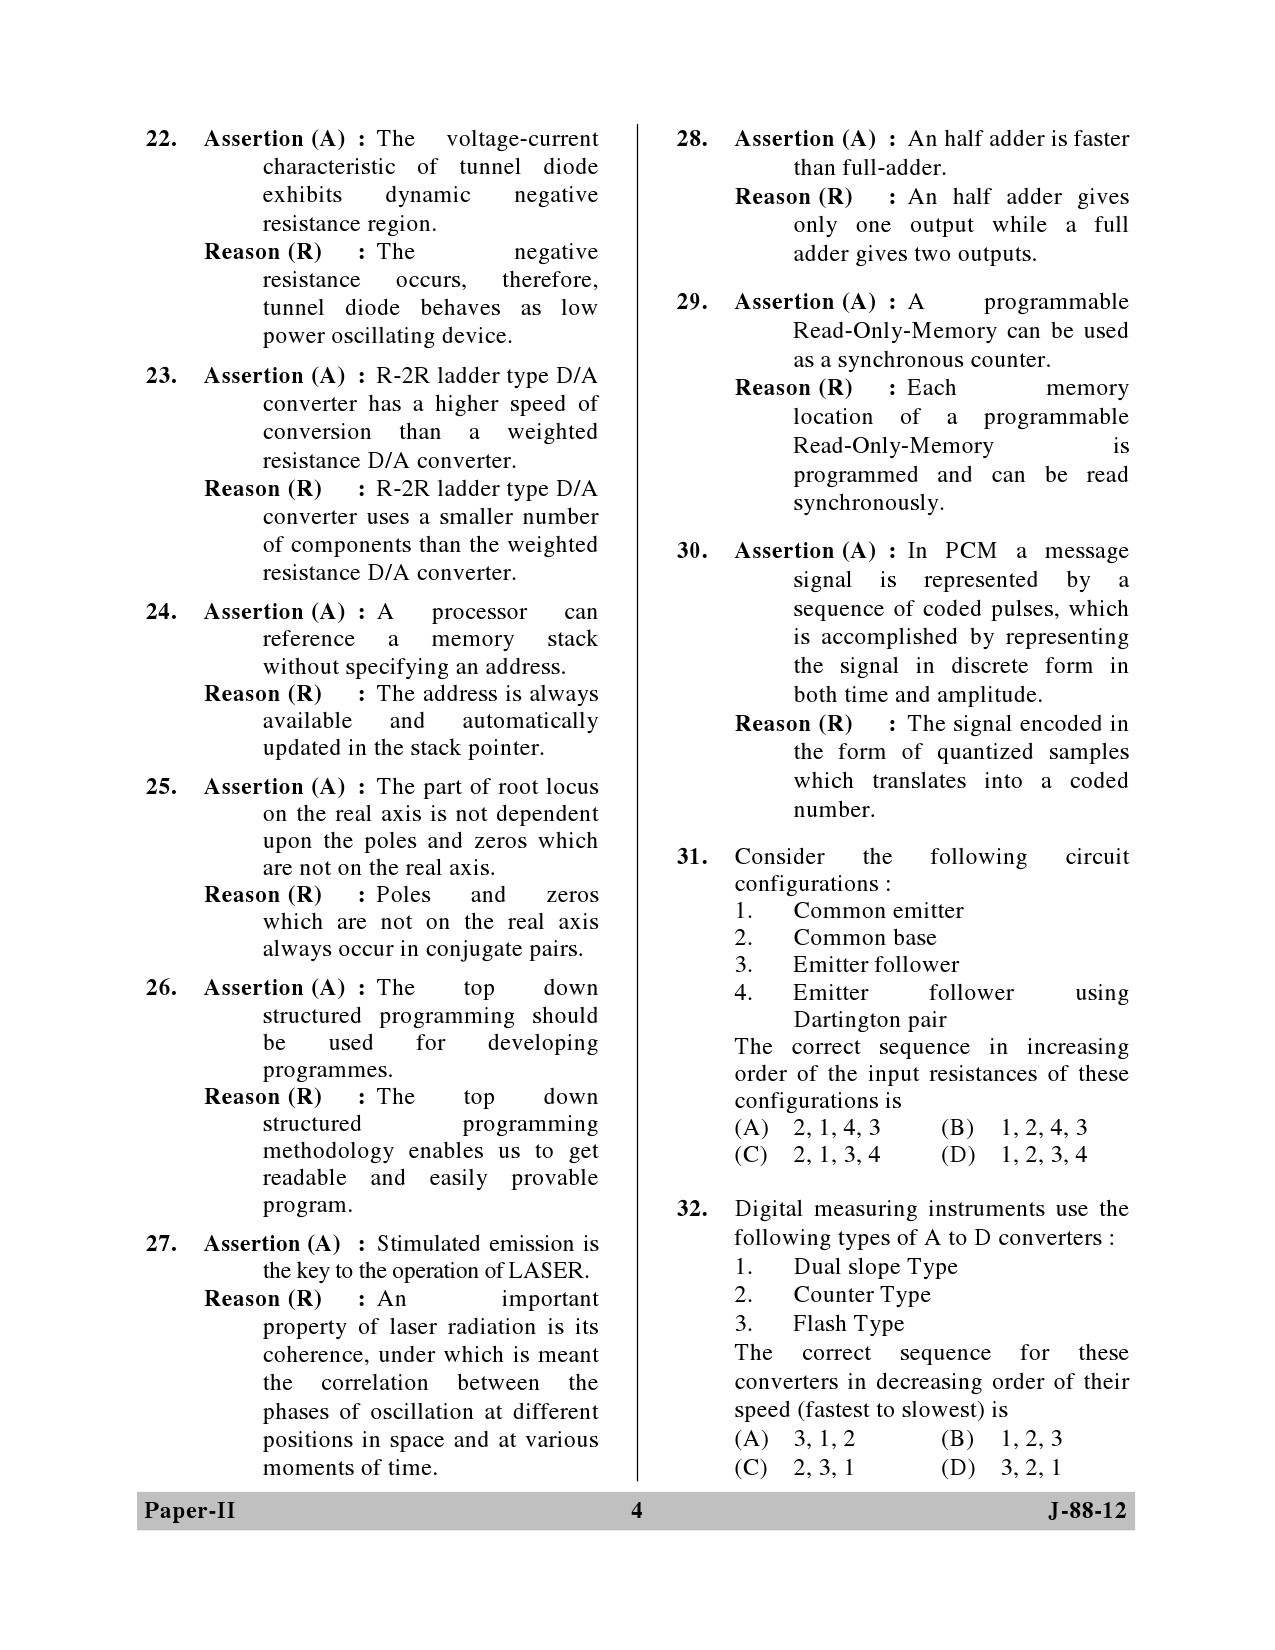 UGC NET Electronic Science Question Paper II June 2012 4